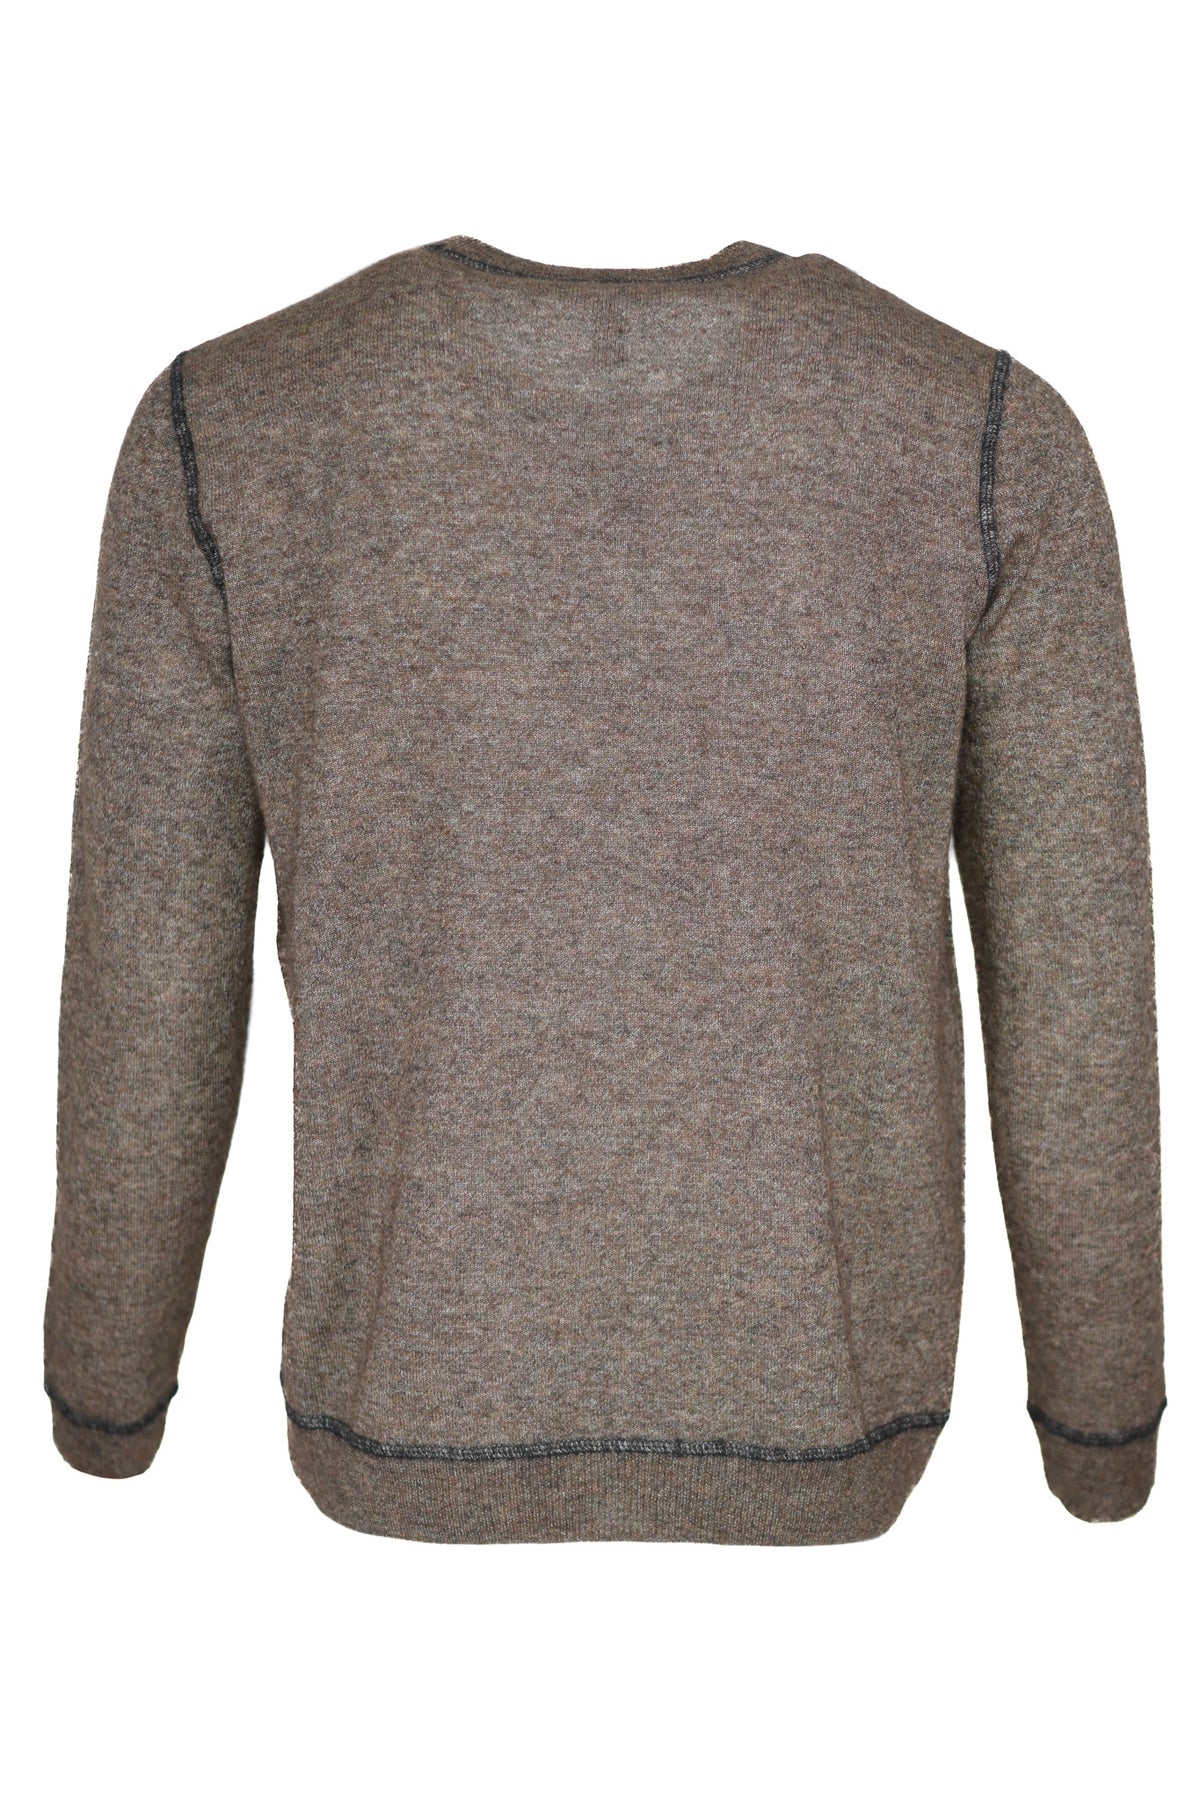 Autumn Cashmere Sweater